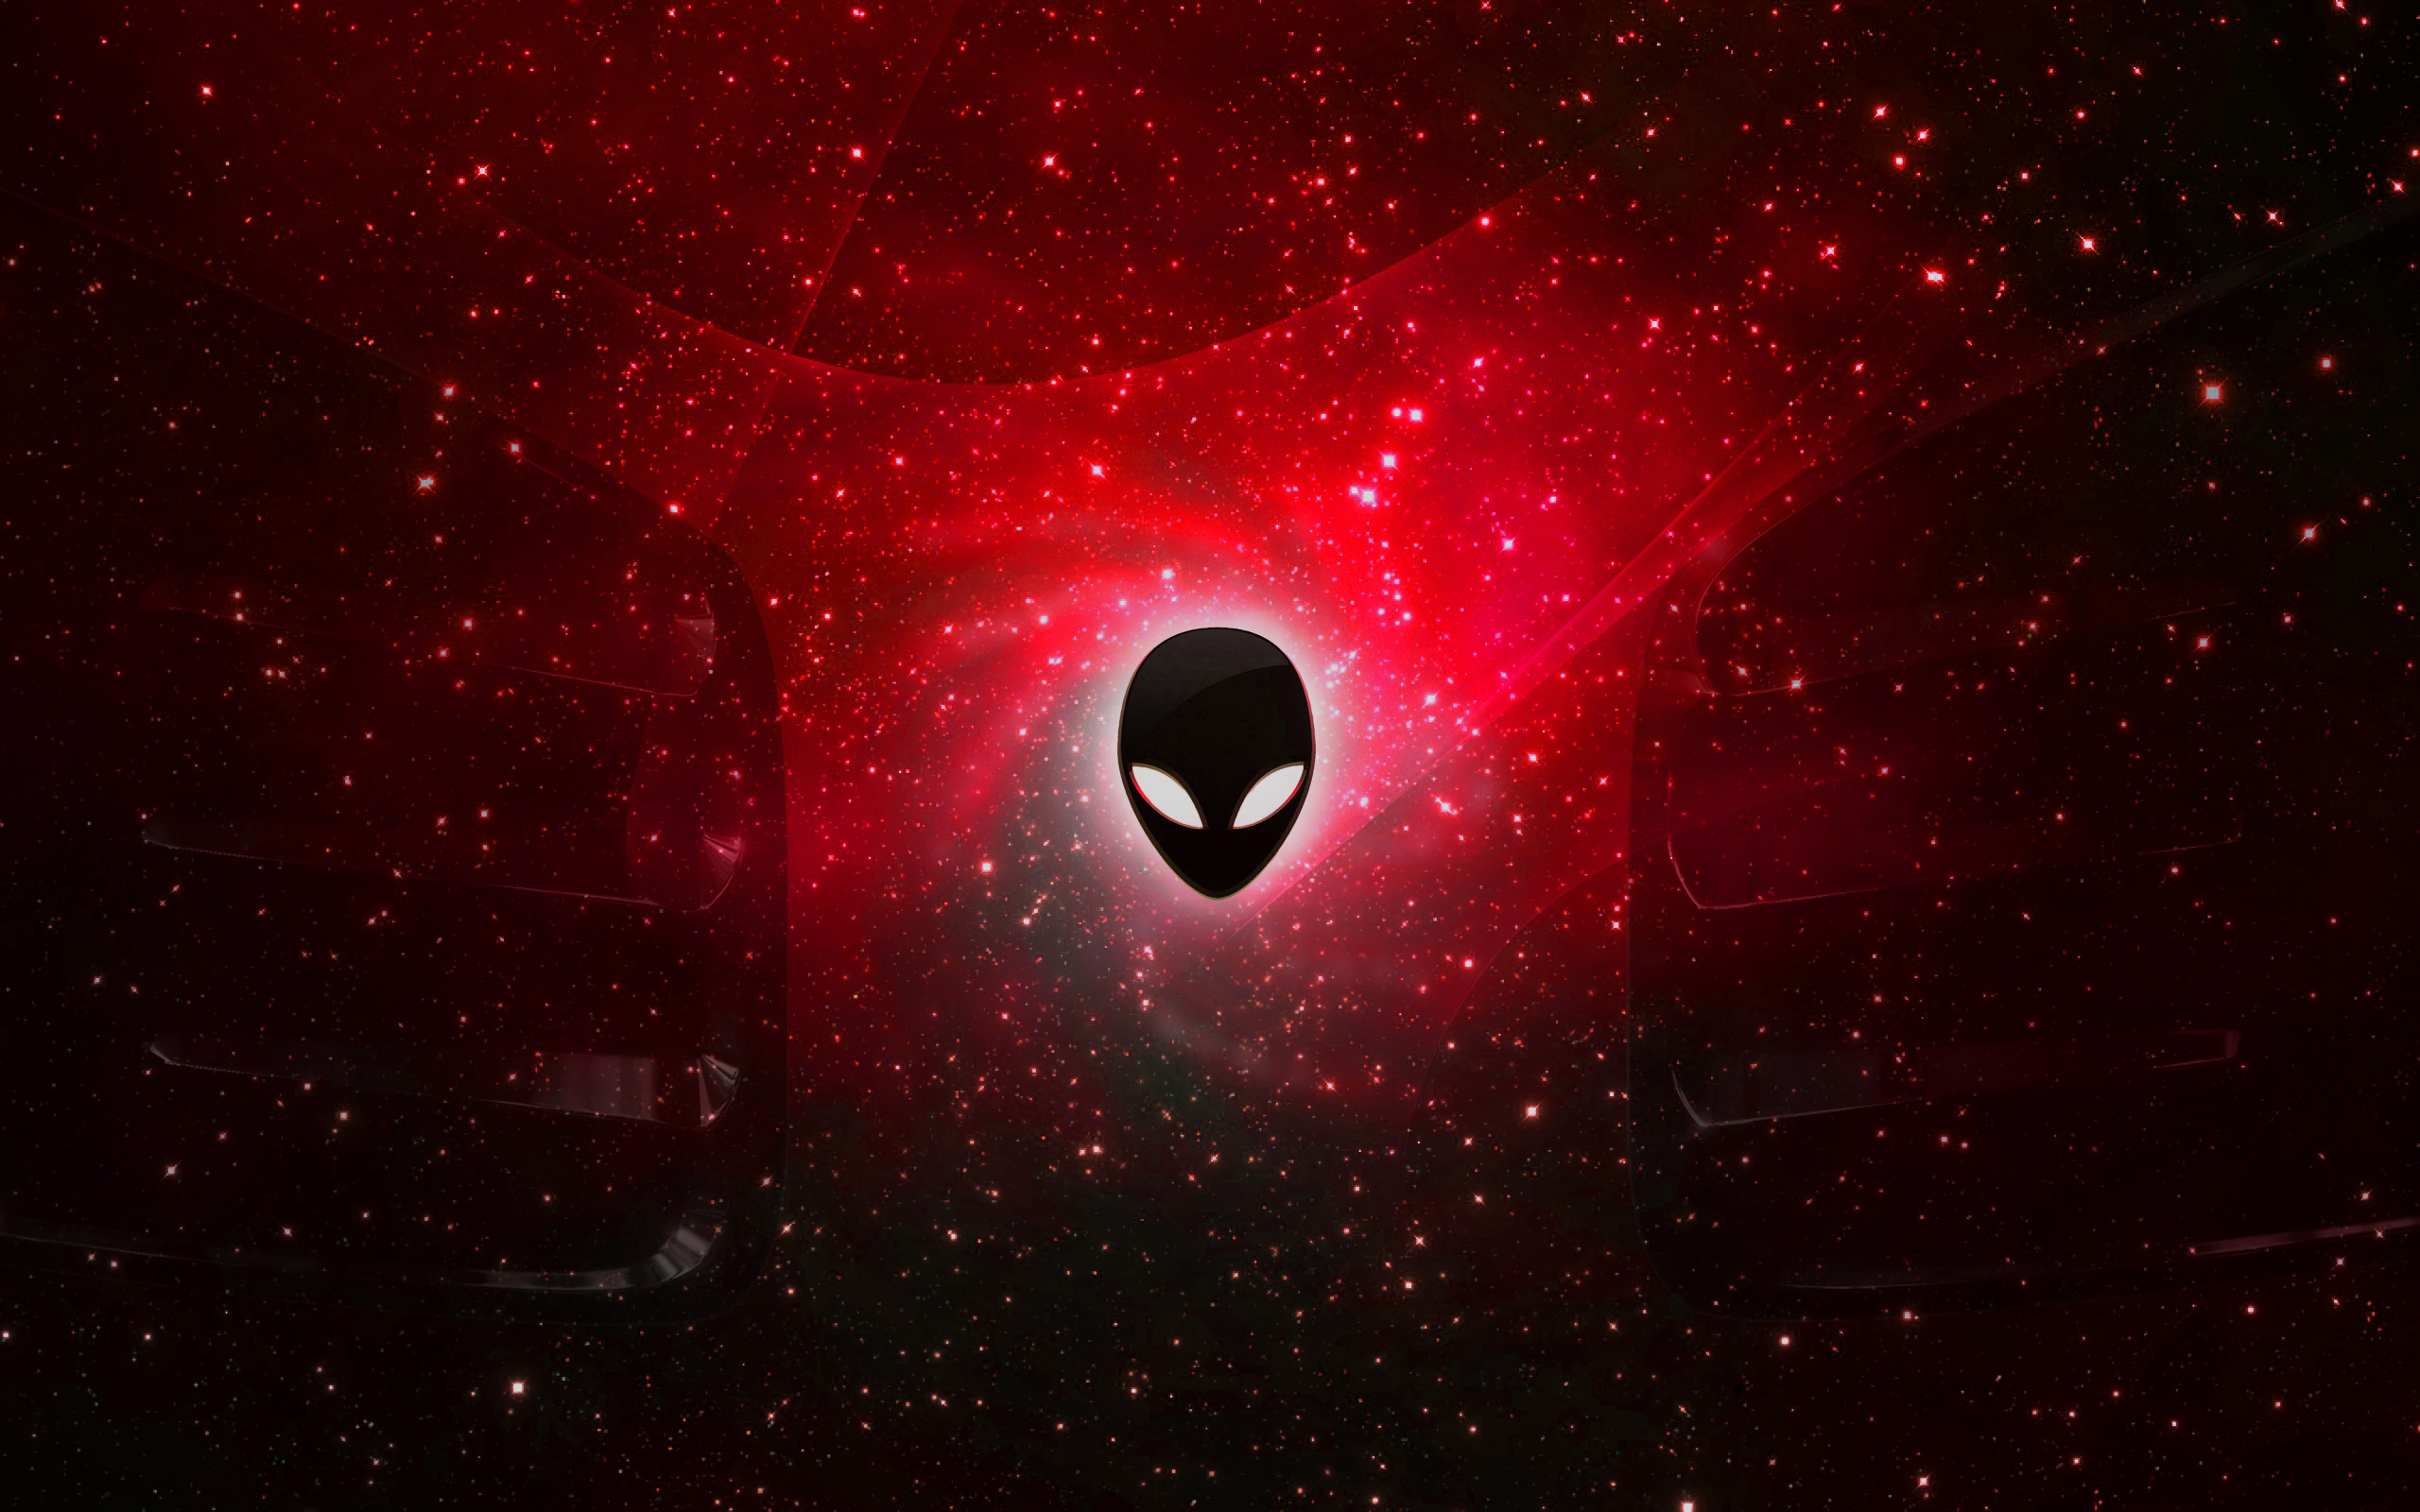 Alienware Desktop Background Fx Themes